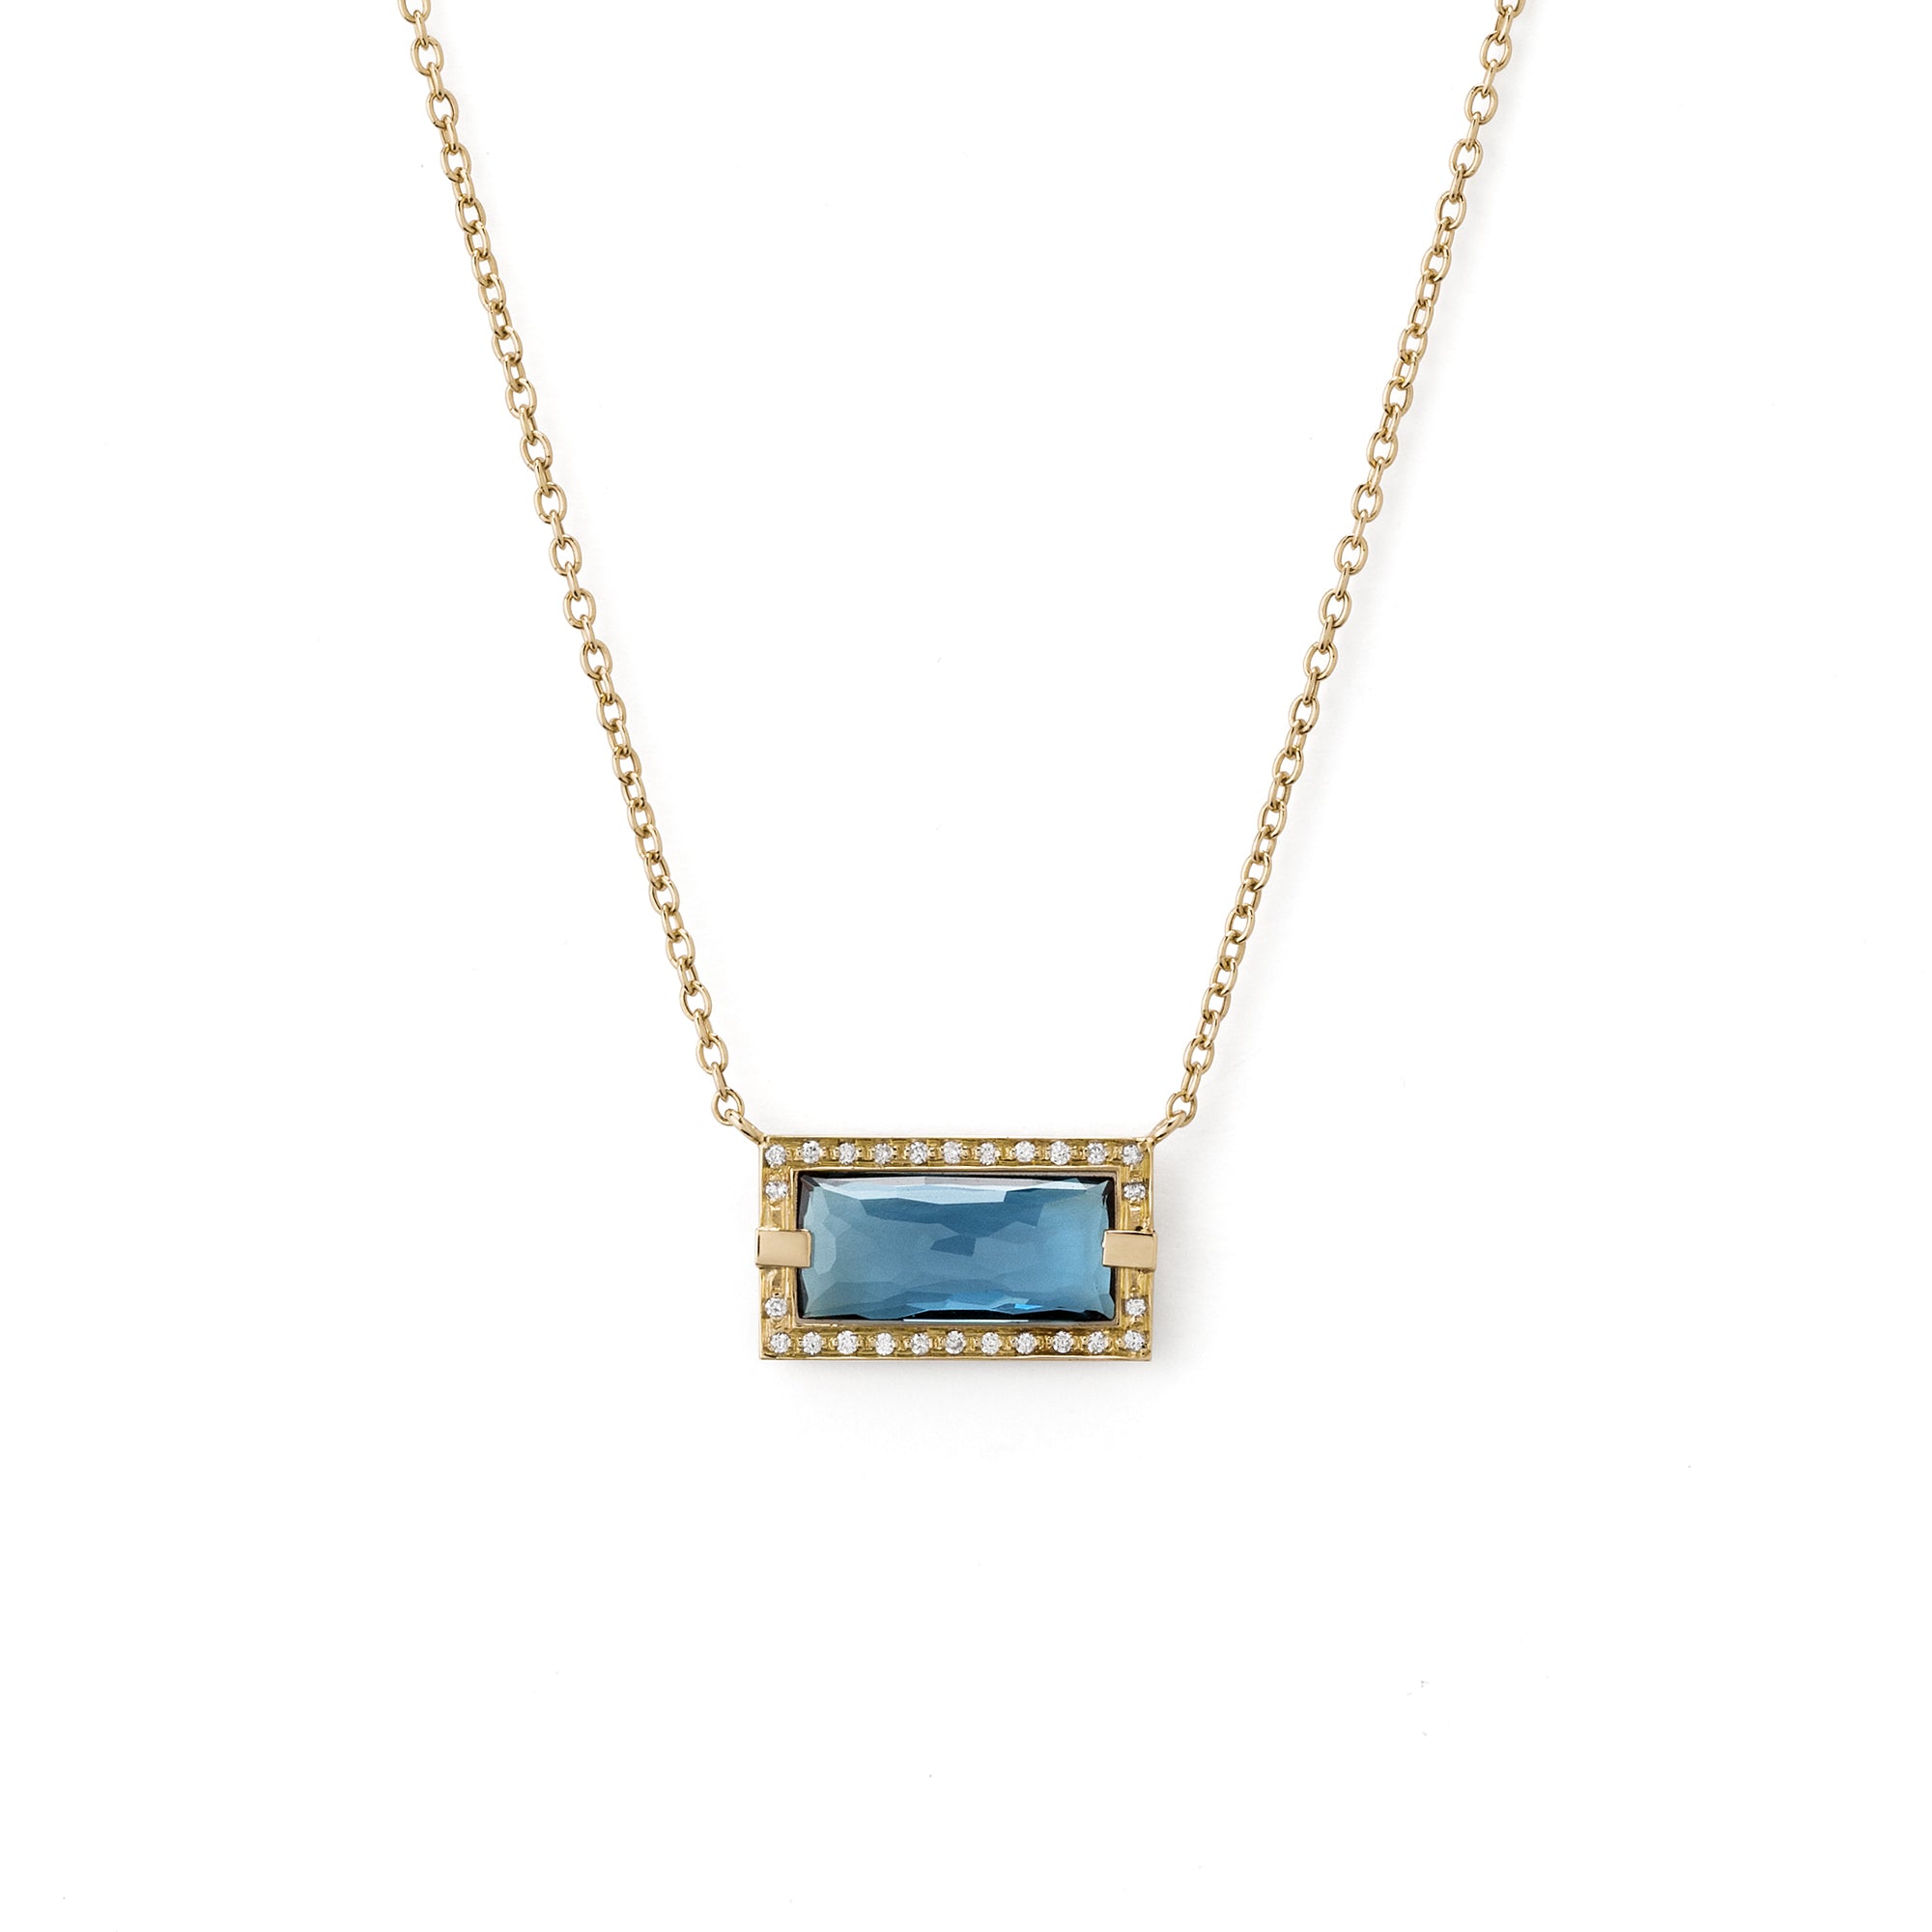 Profondo Blu single pendant necklace